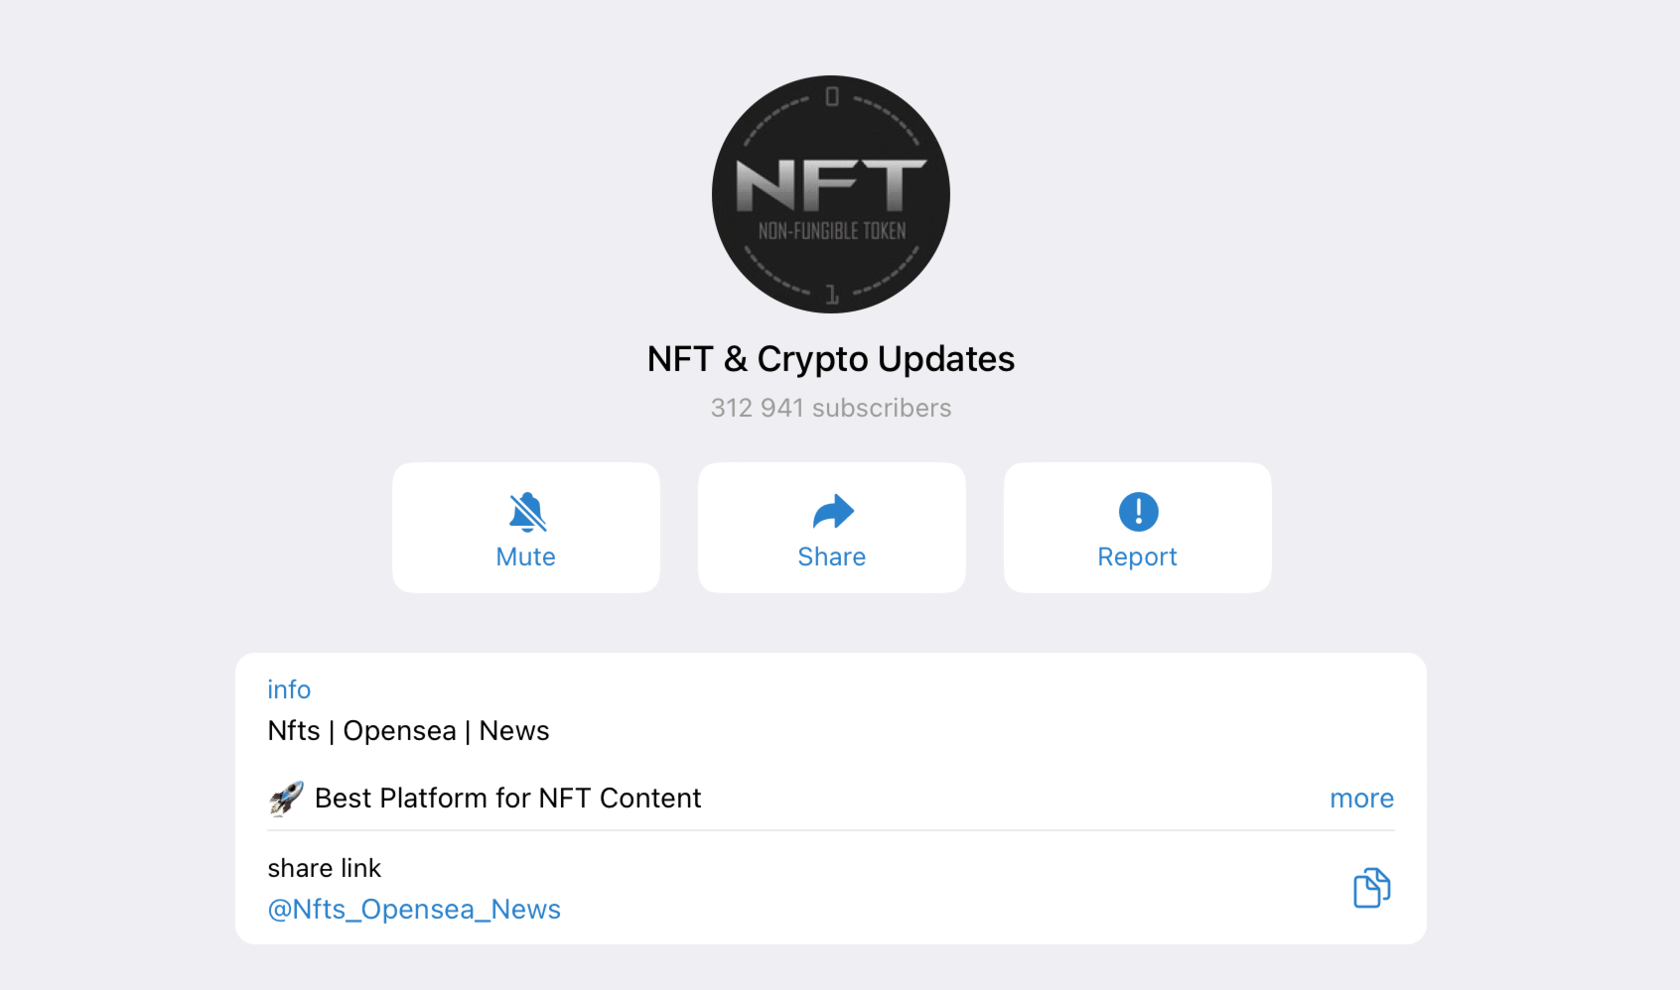 NFT & Crypto Updates